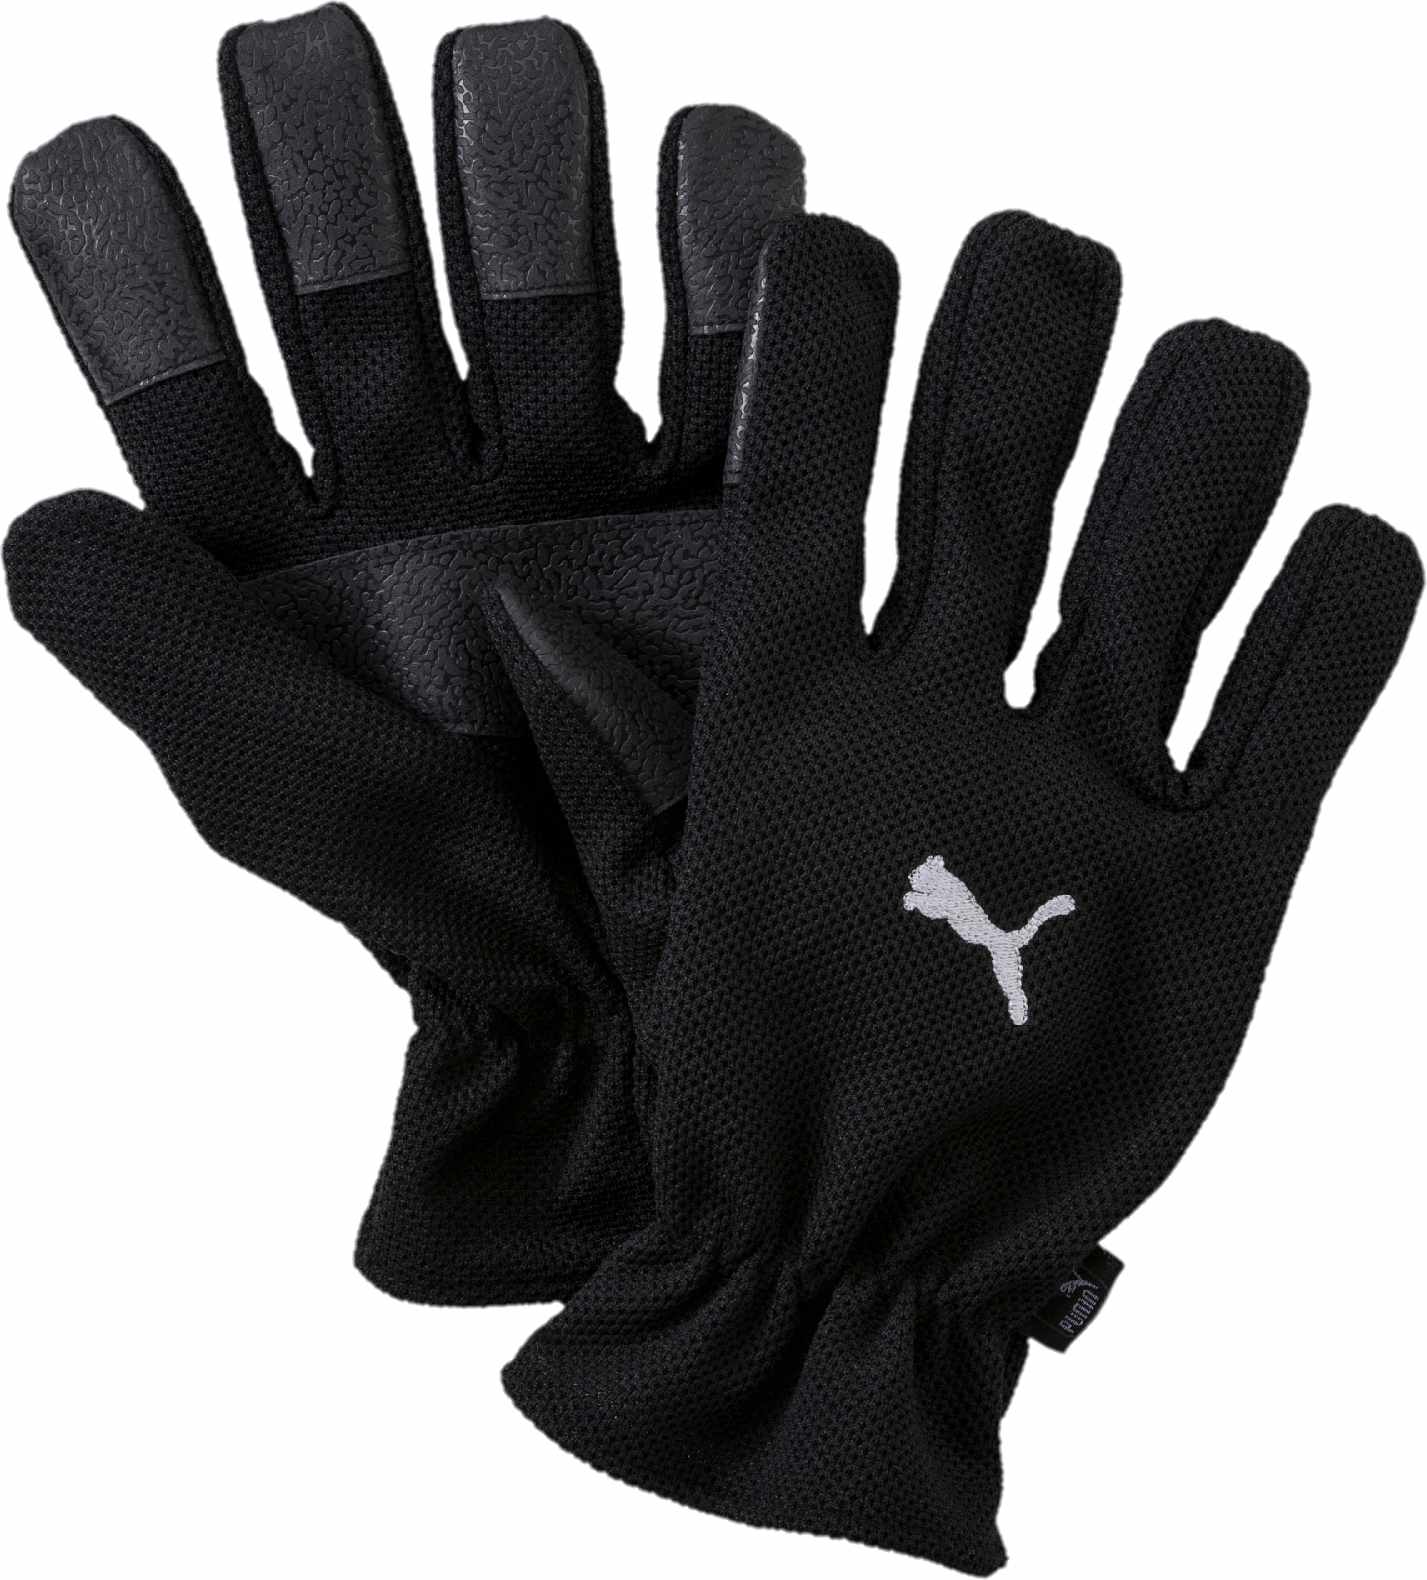 Football gloves